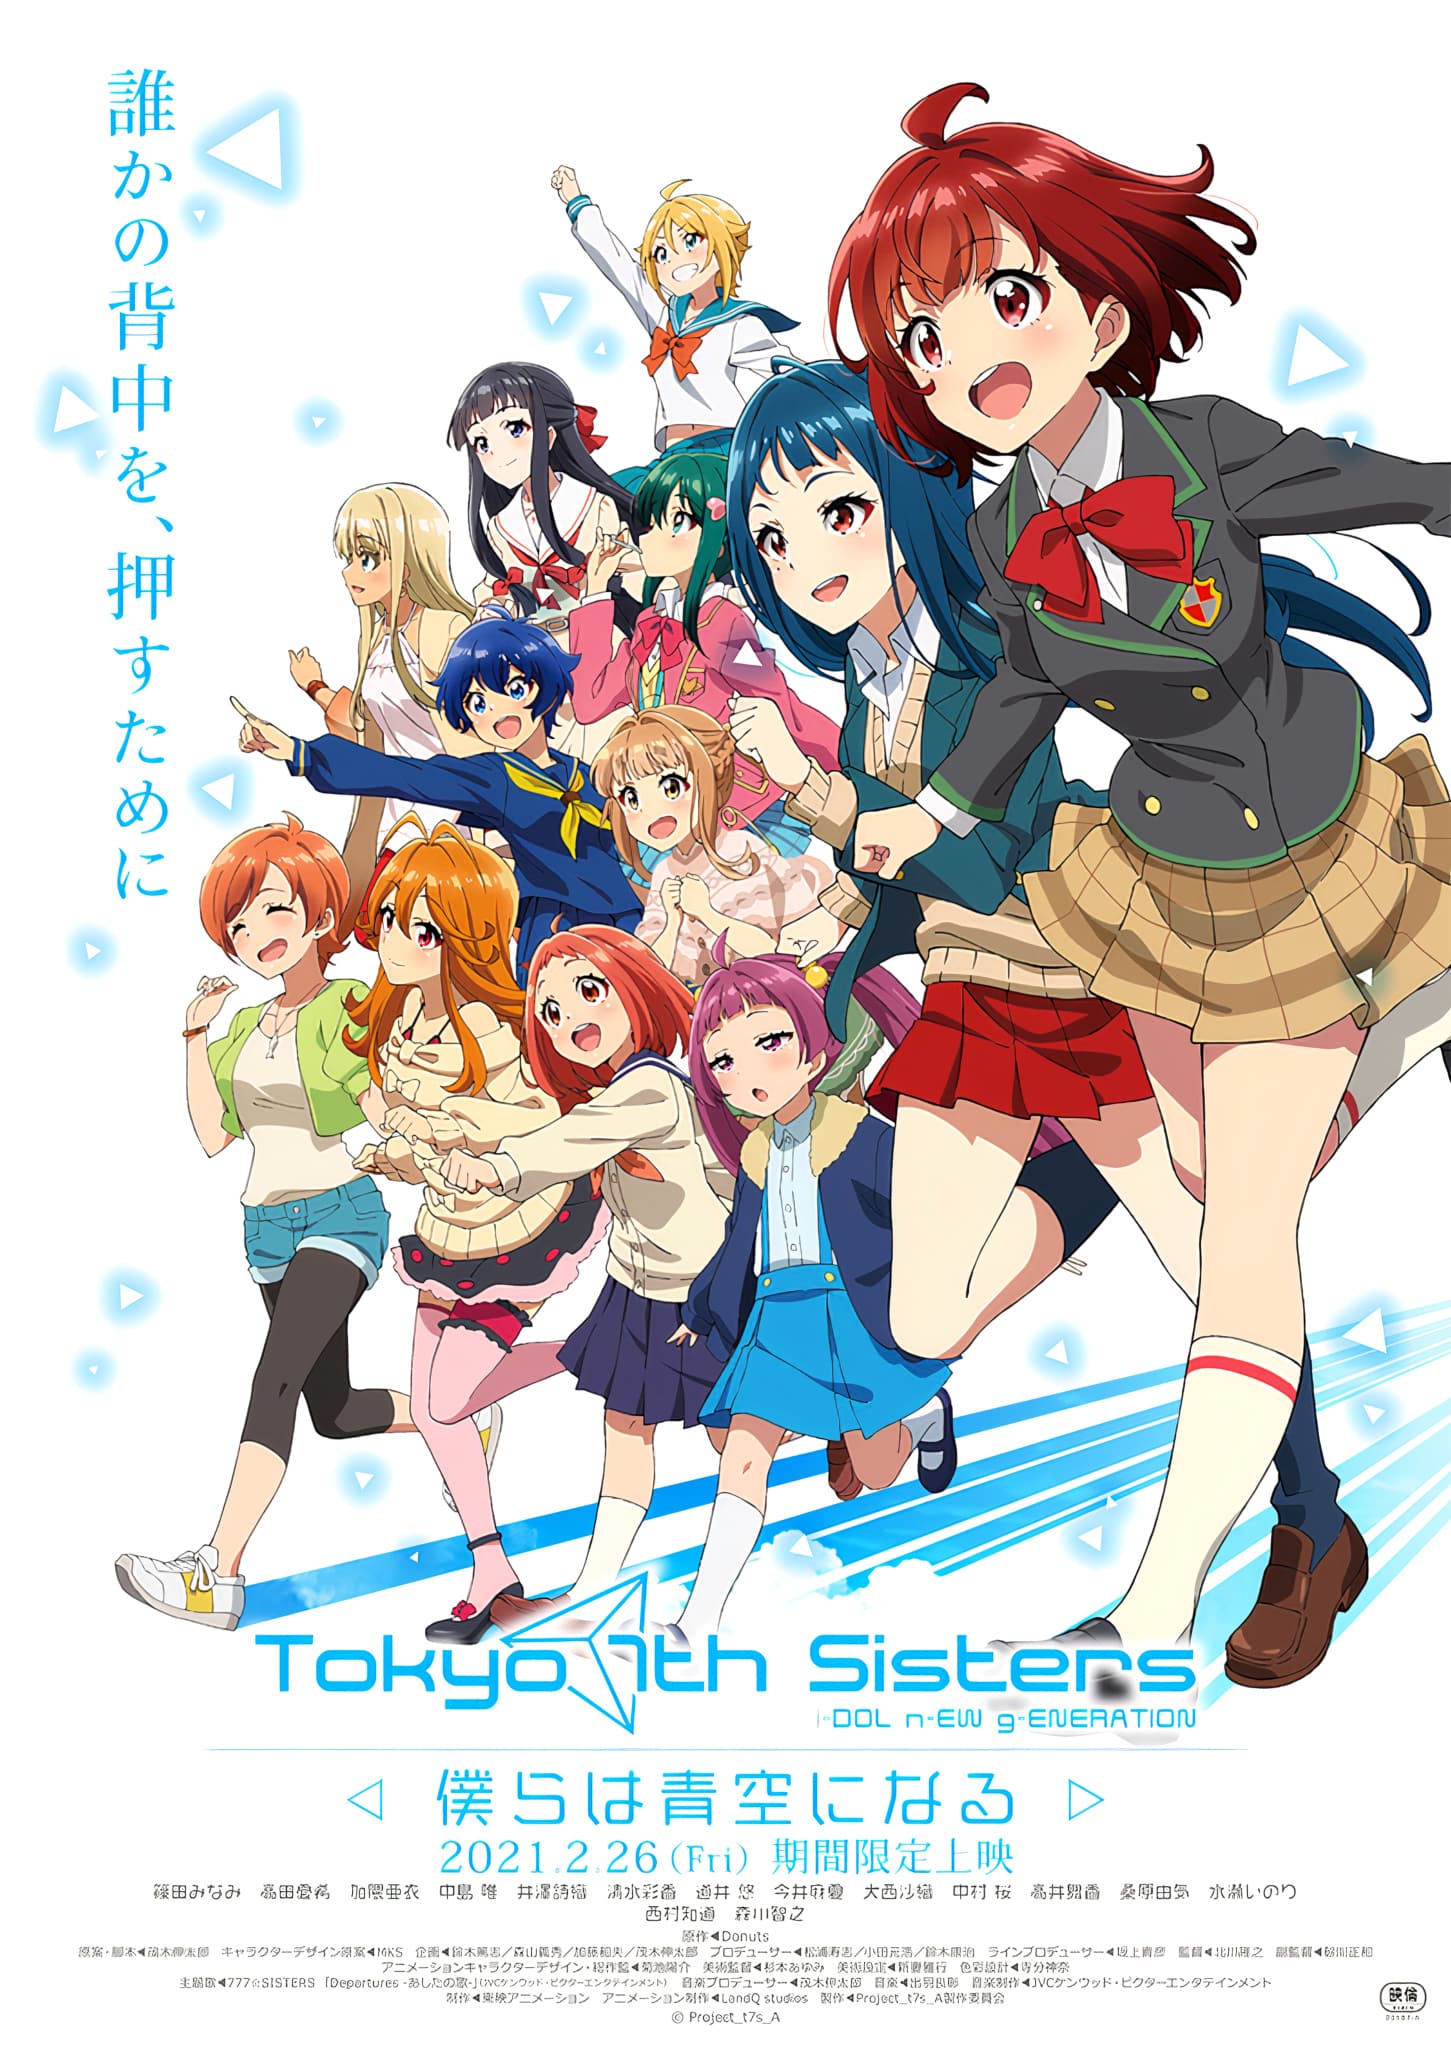 Annonce du film Tokyo 7th Sisters en Trailer